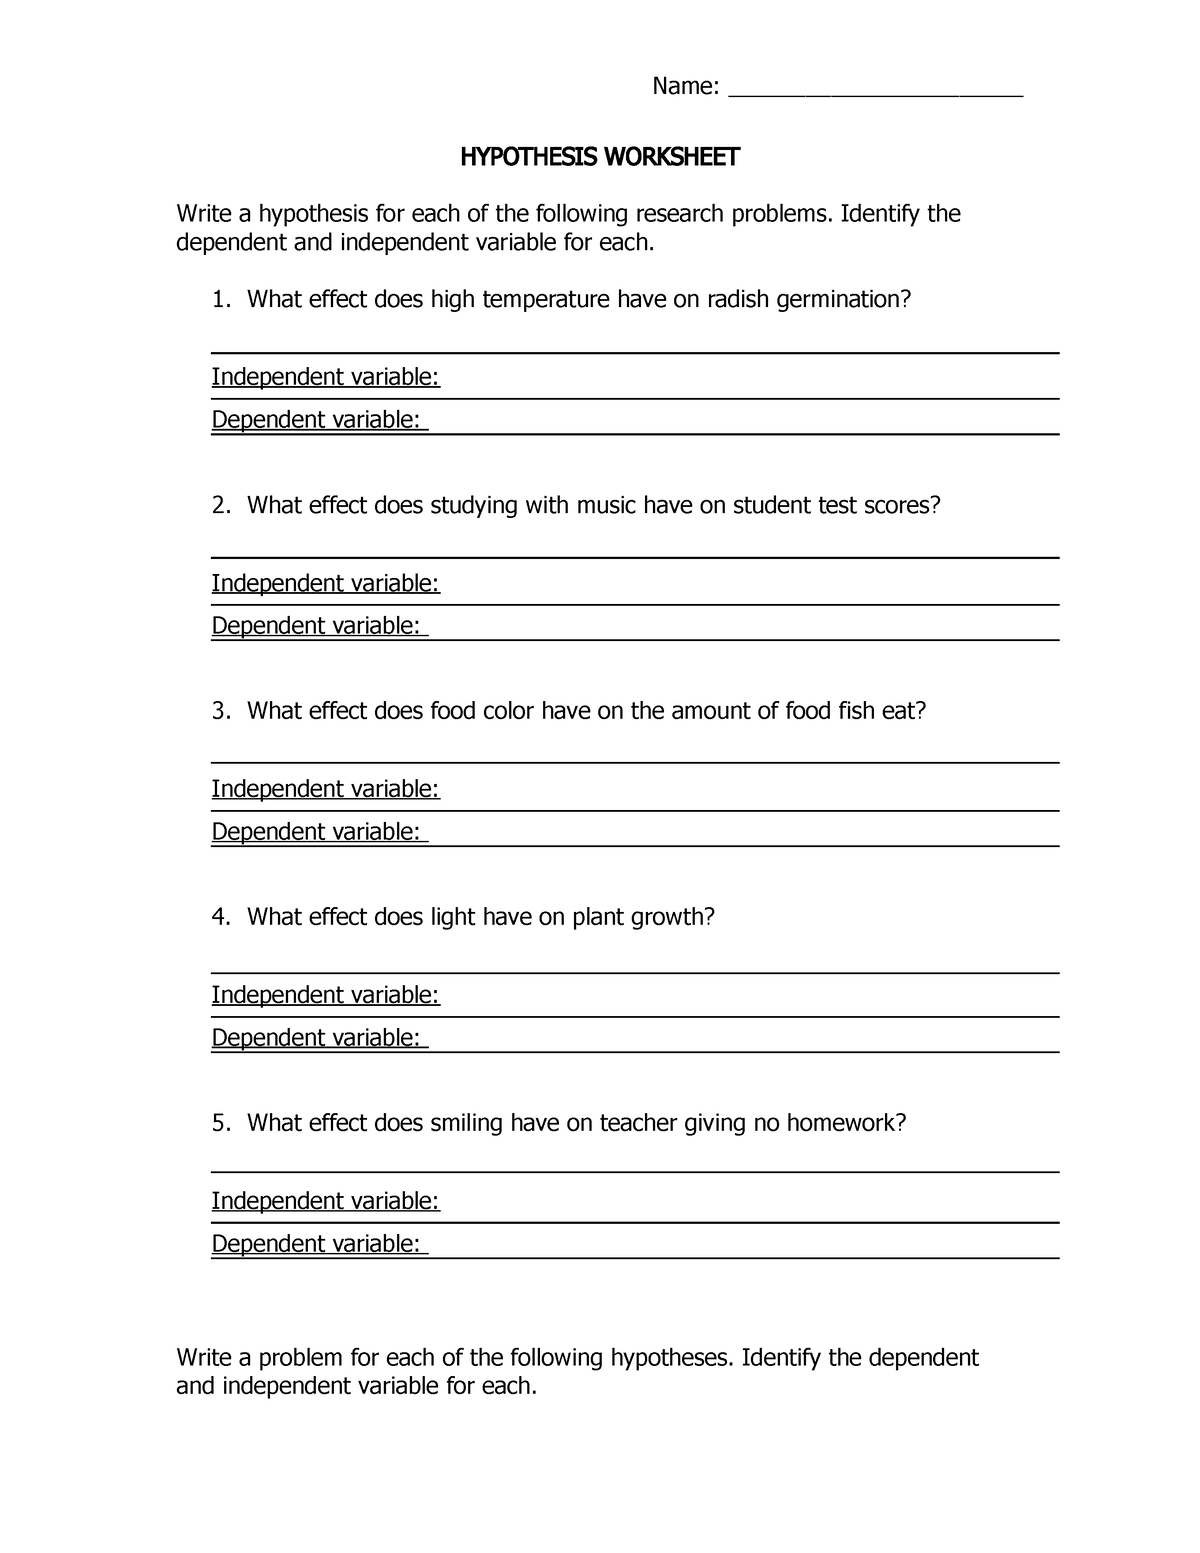 hypothesis worksheet 2 answer key pdf